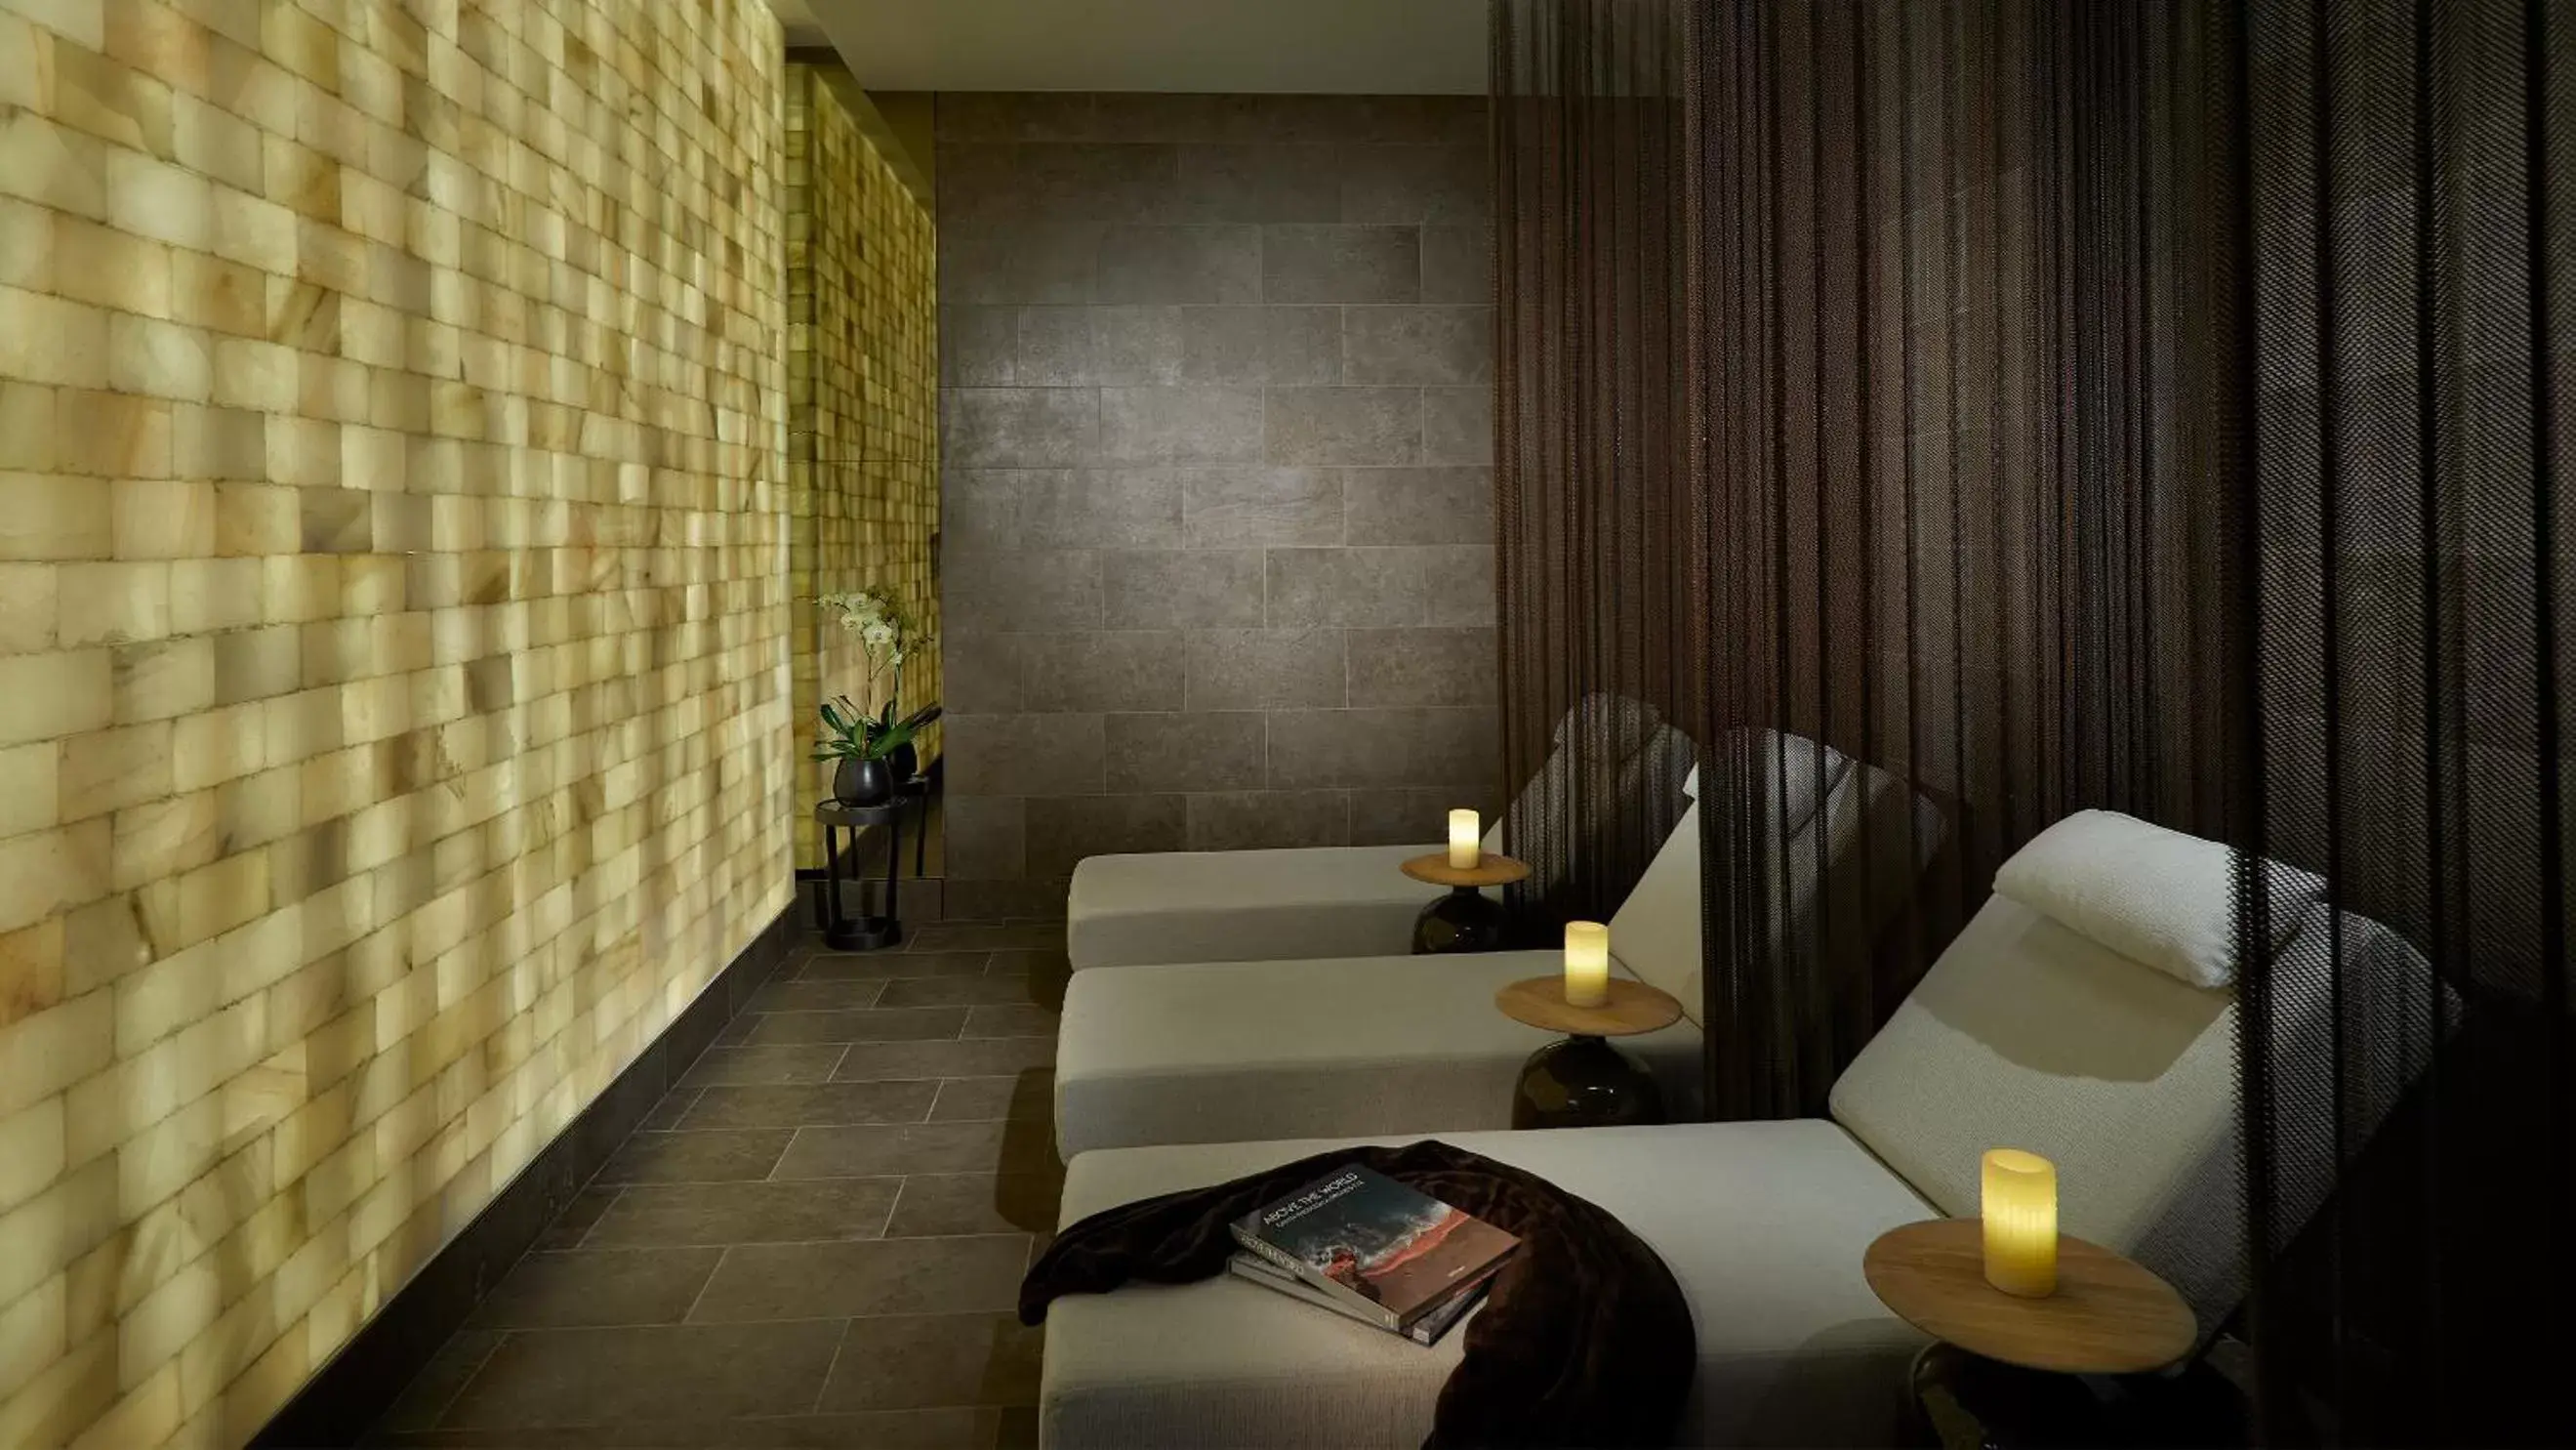 Spa and wellness centre/facilities, Bathroom in The Guitar Hotel at Seminole Hard Rock Hotel & Casino